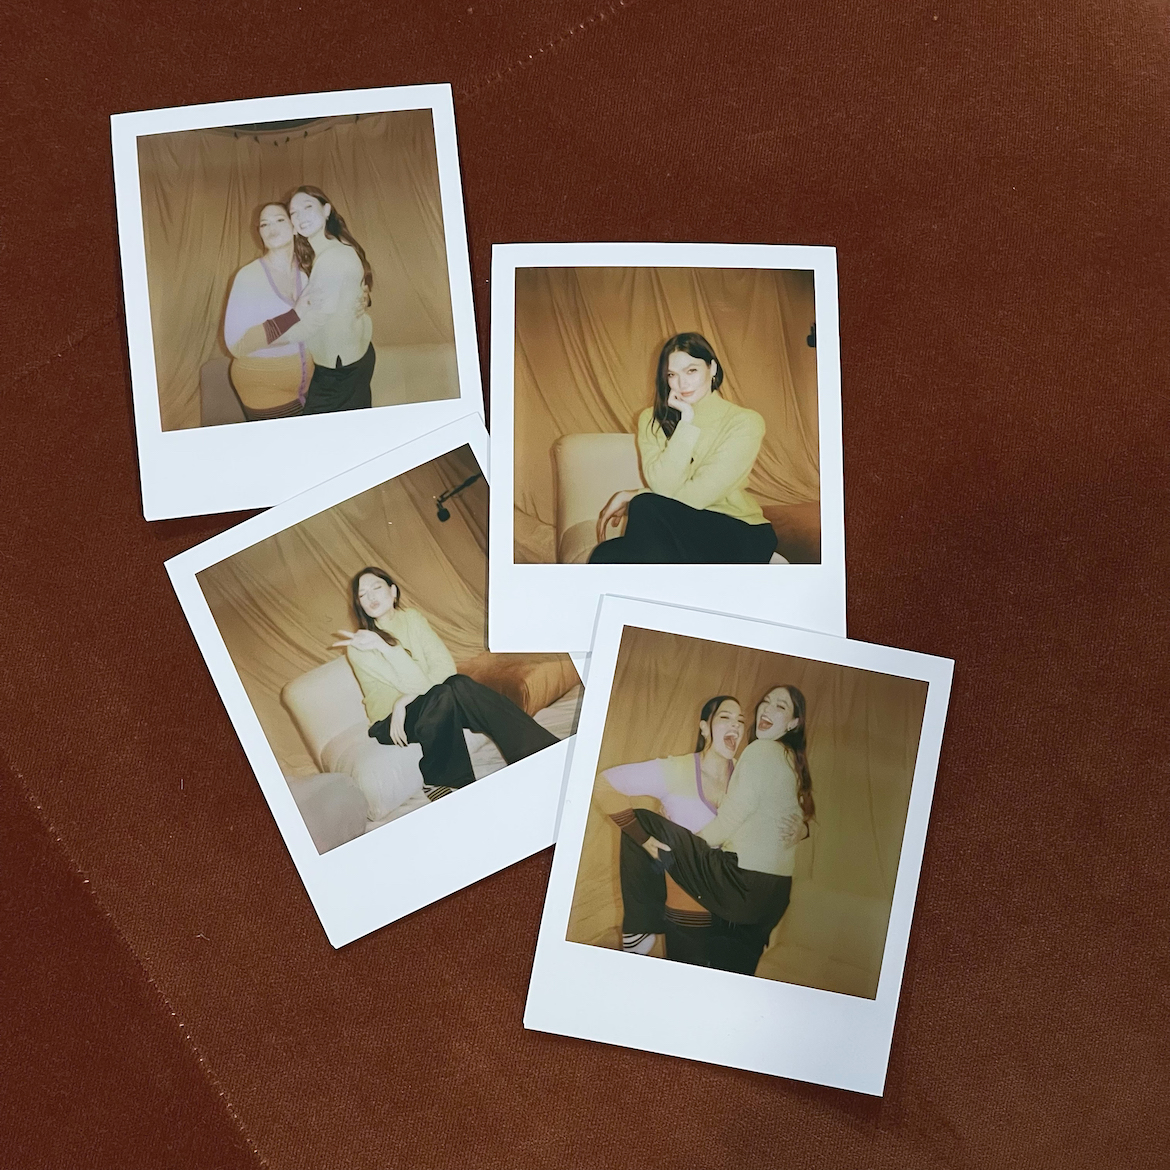 A series of Polaroid photographs showing models Karlie Kloss and Ashley Graham. 